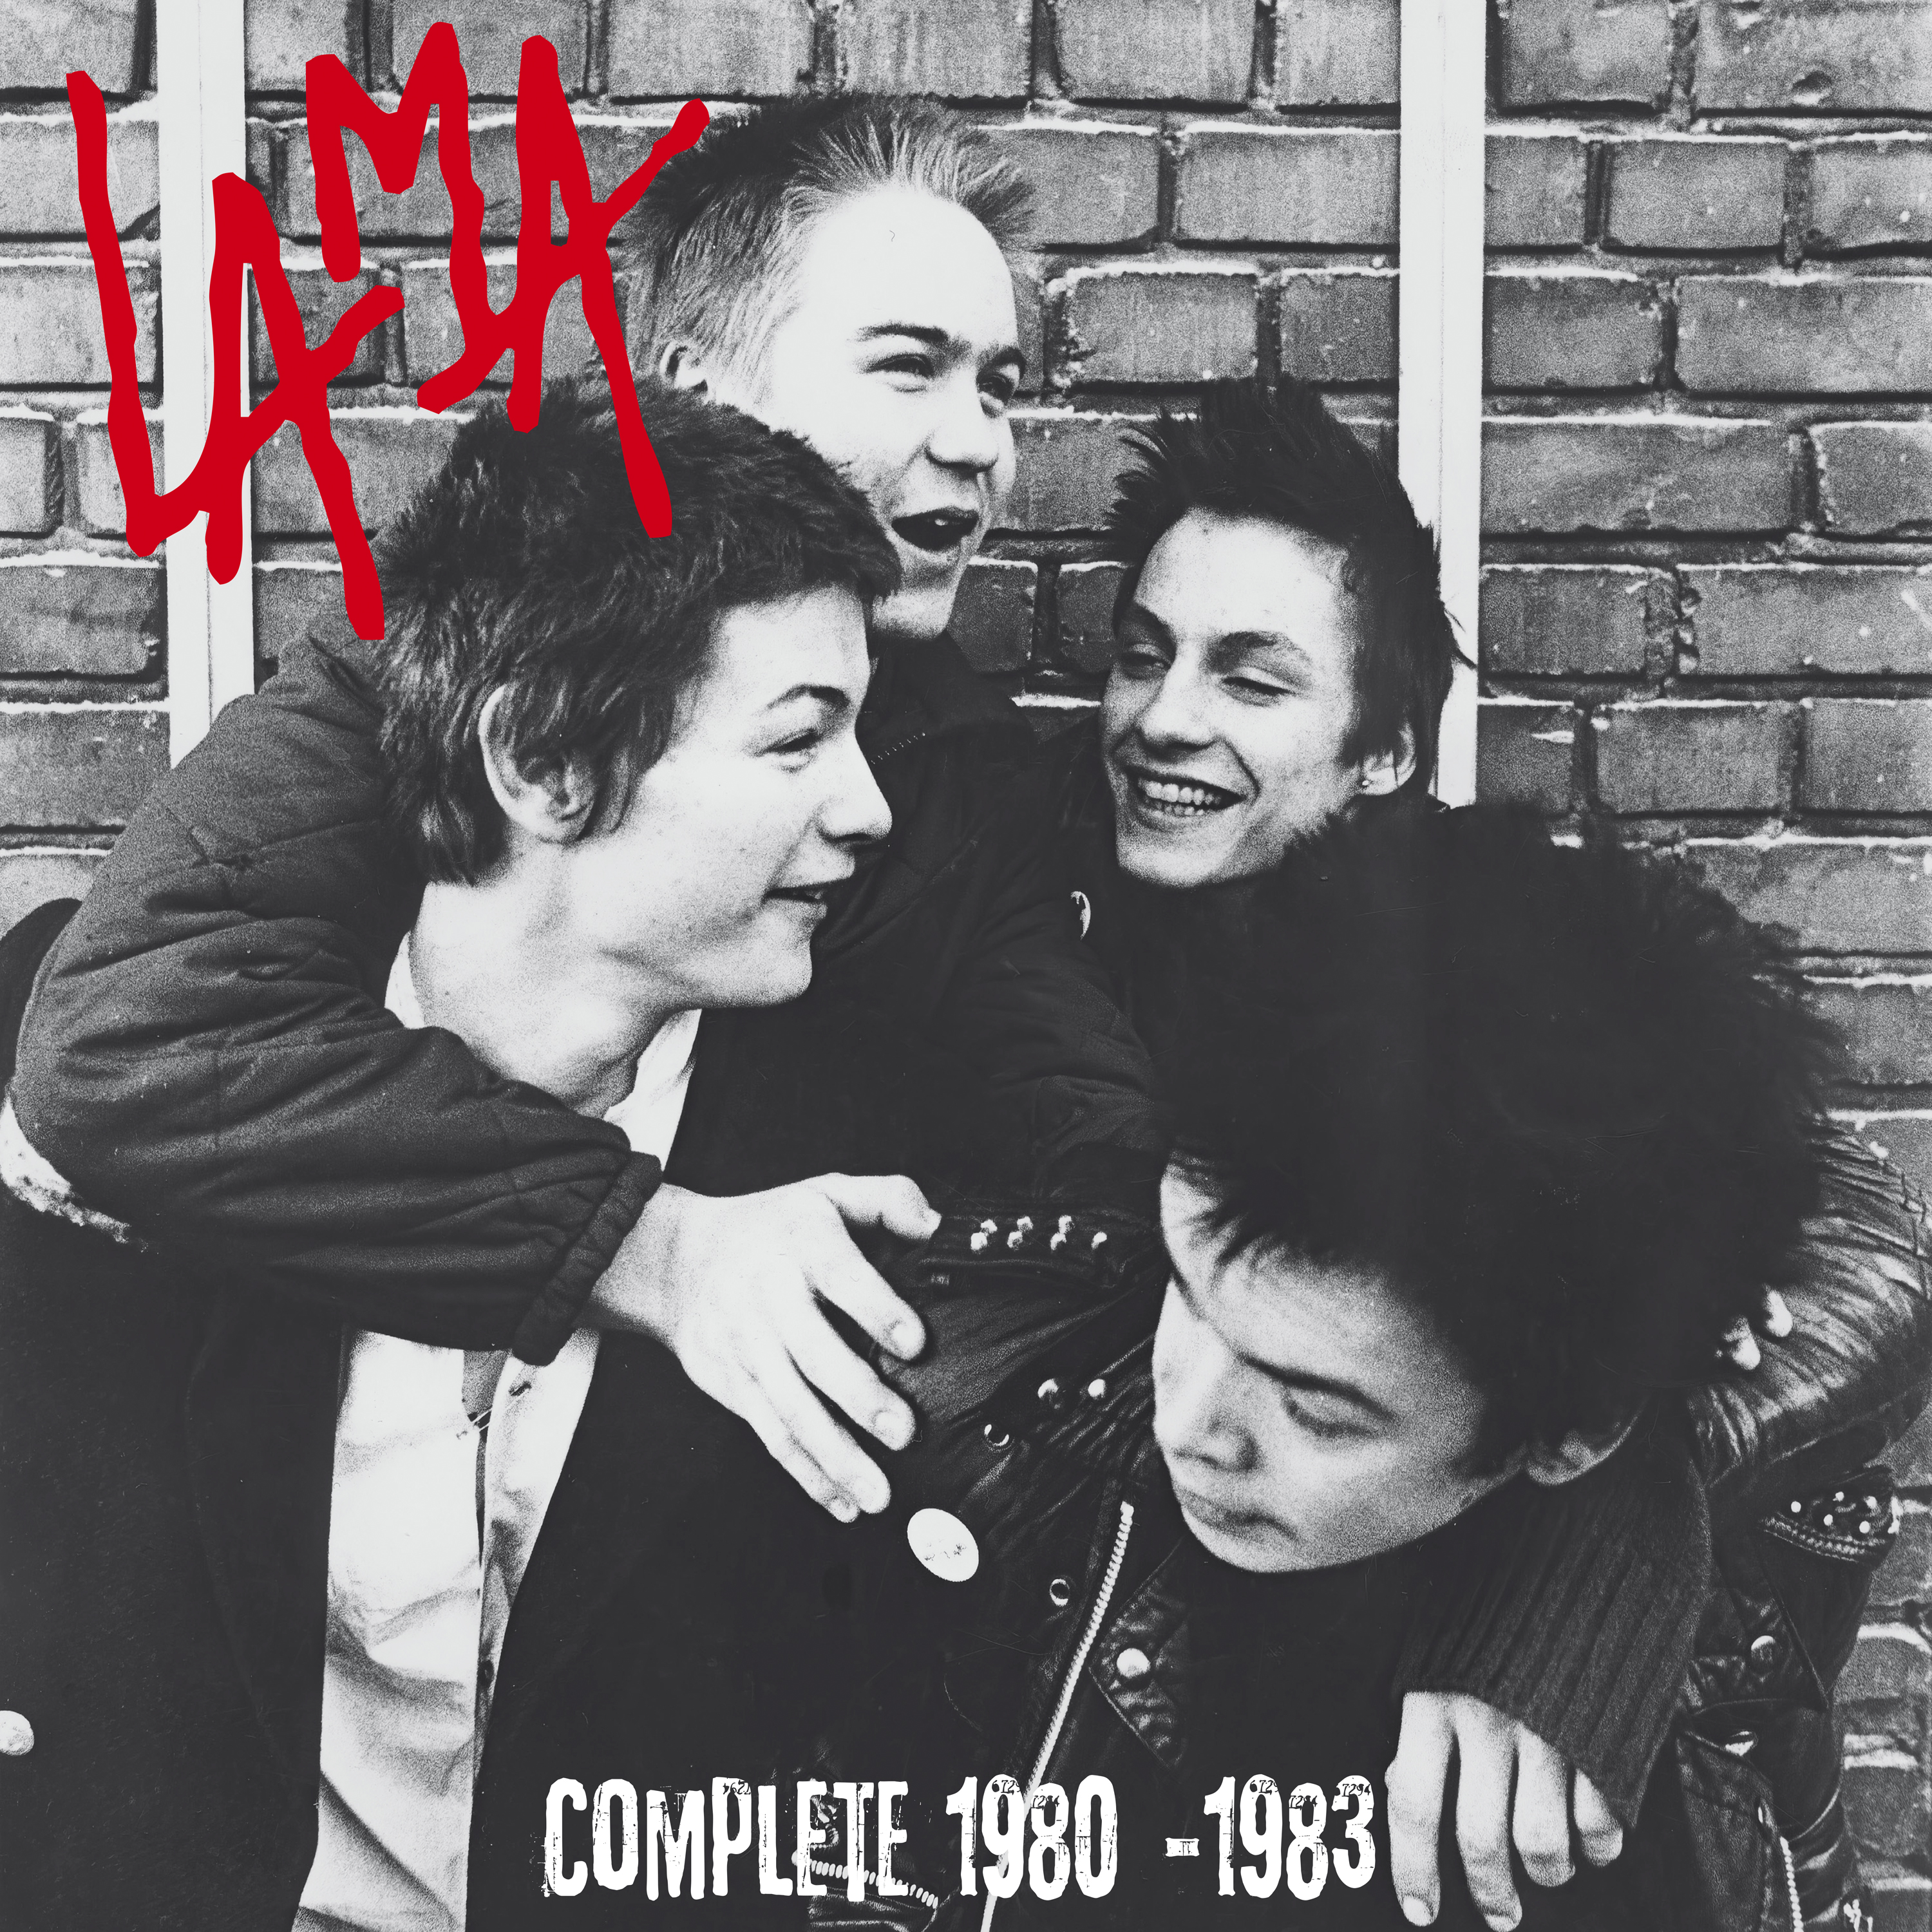 Lama - Complete 1980-1983 - CD